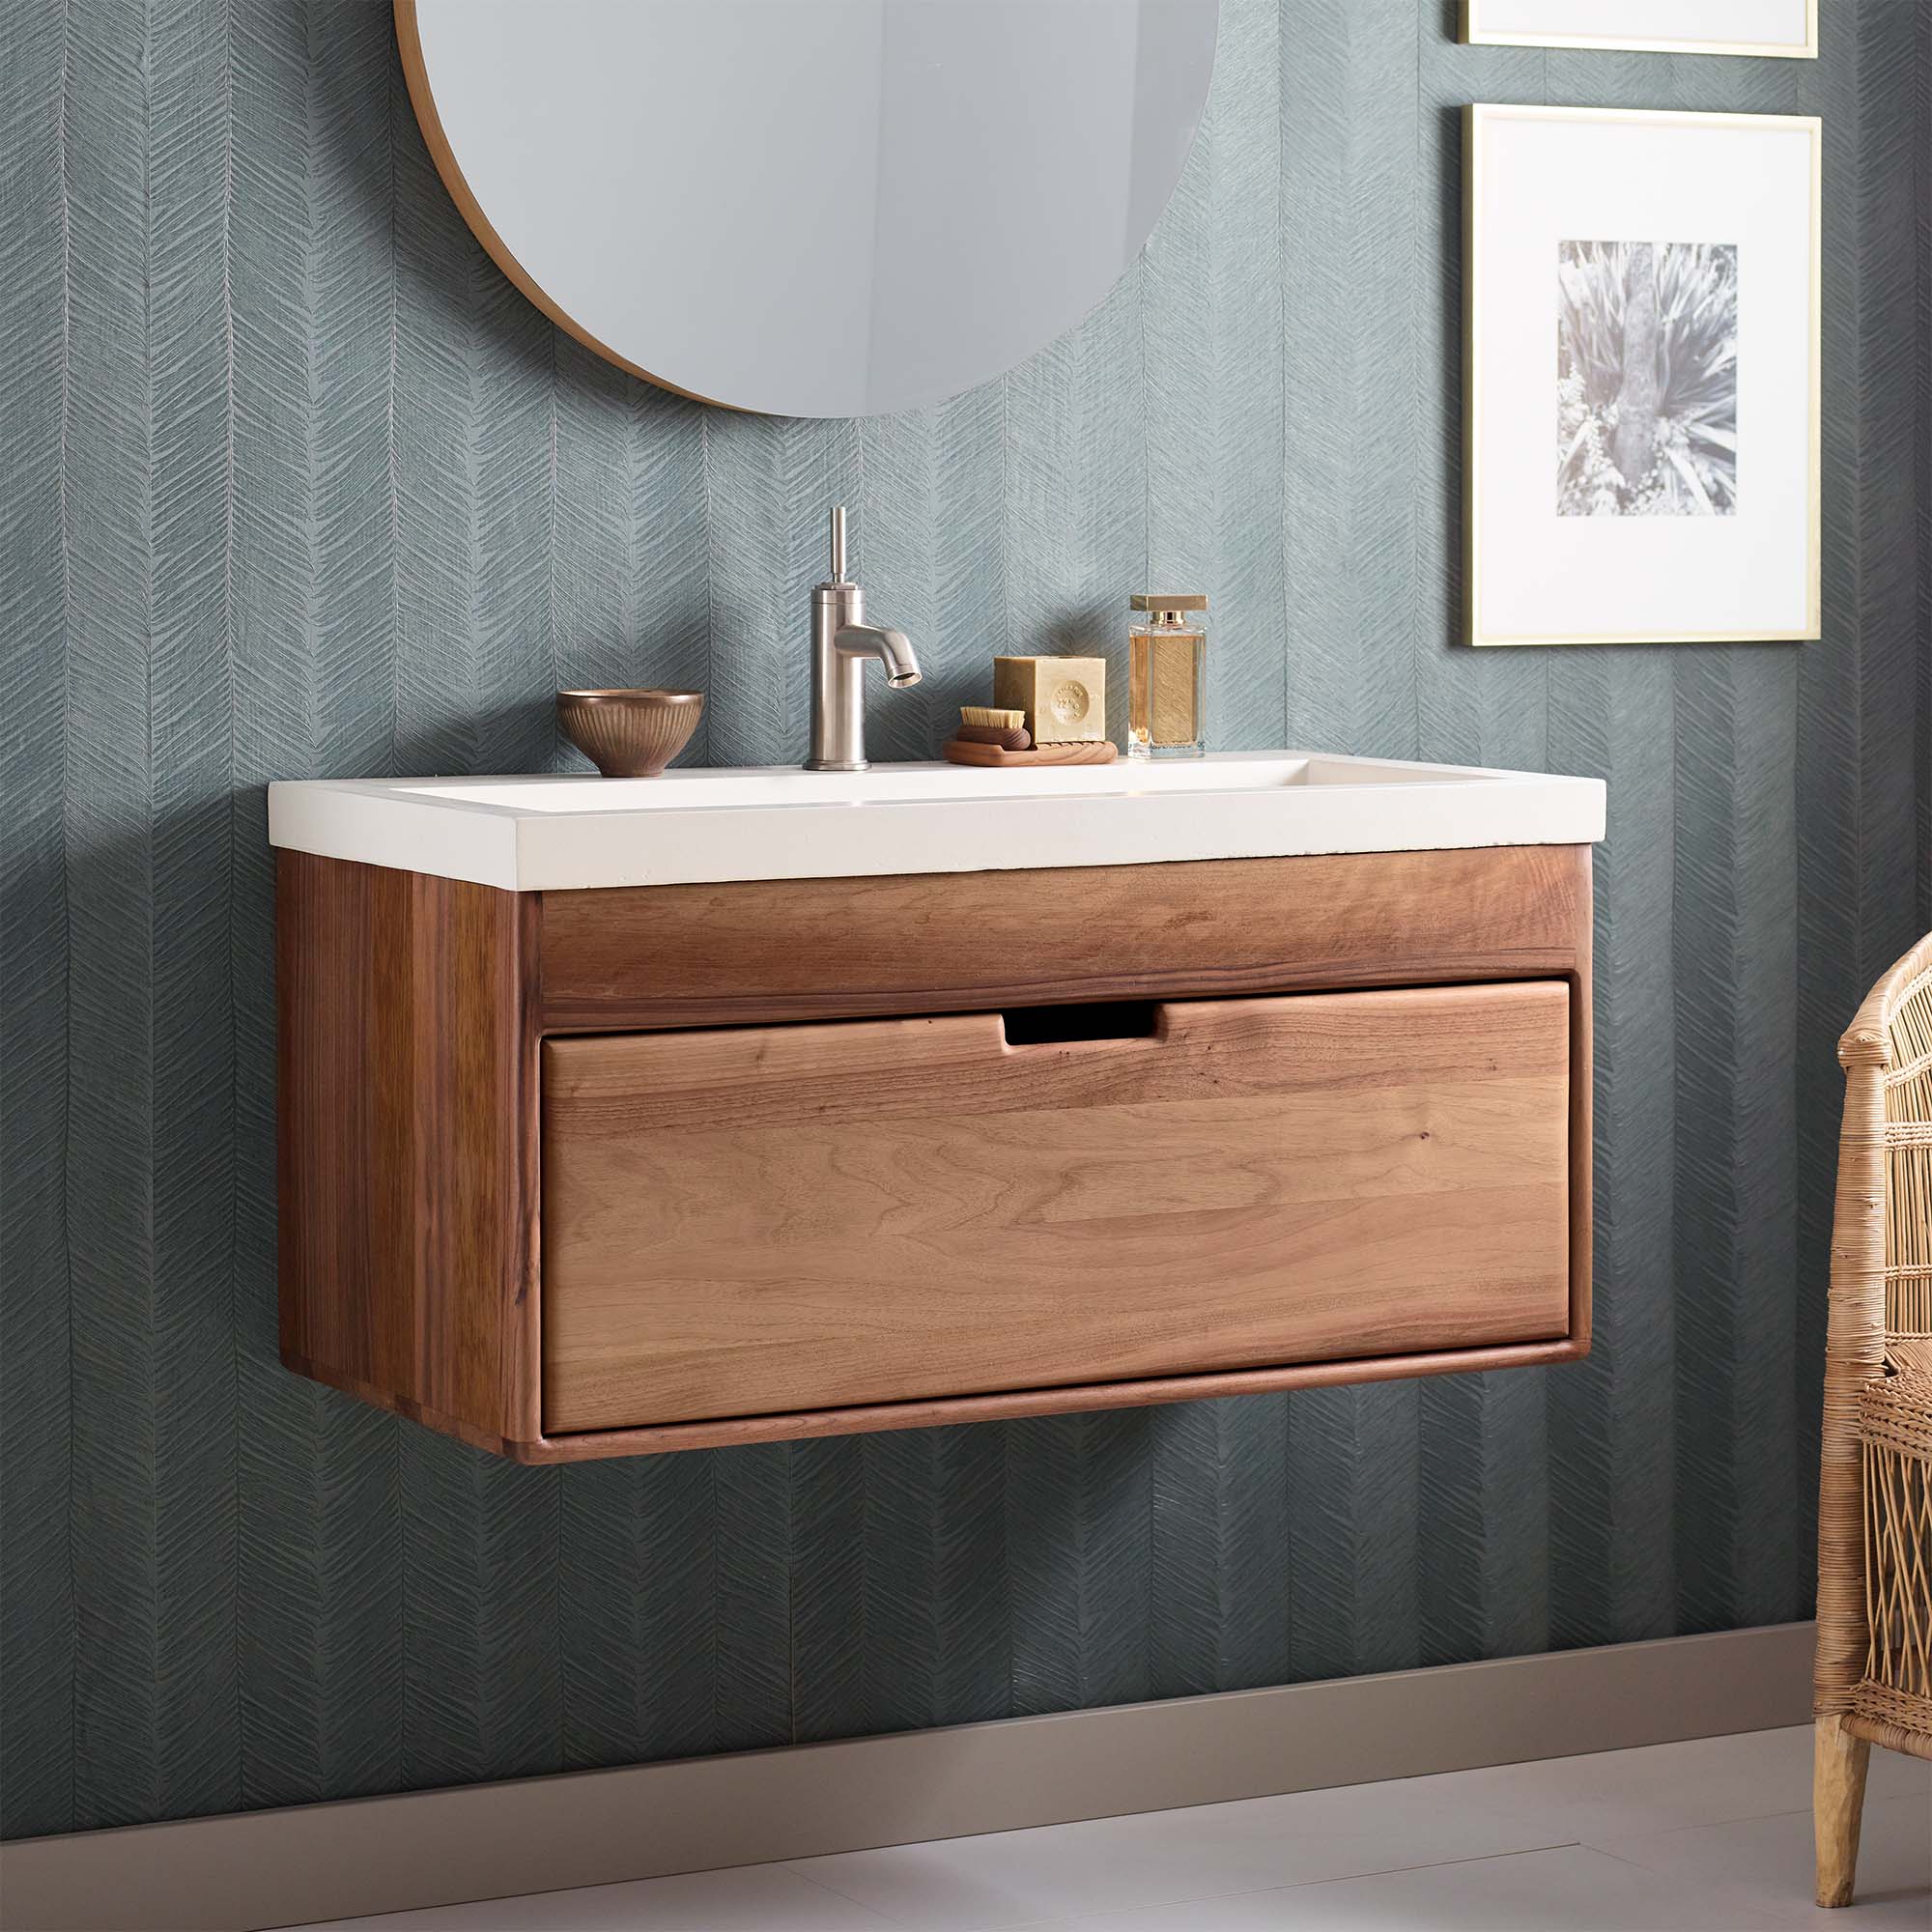 https://nativetrailshome.com/wp-content/uploads/Images/Bath_Furniture/Topanga-Bathroom-Vanity-Walnut-Wall-Mount-VNA201-1.jpg